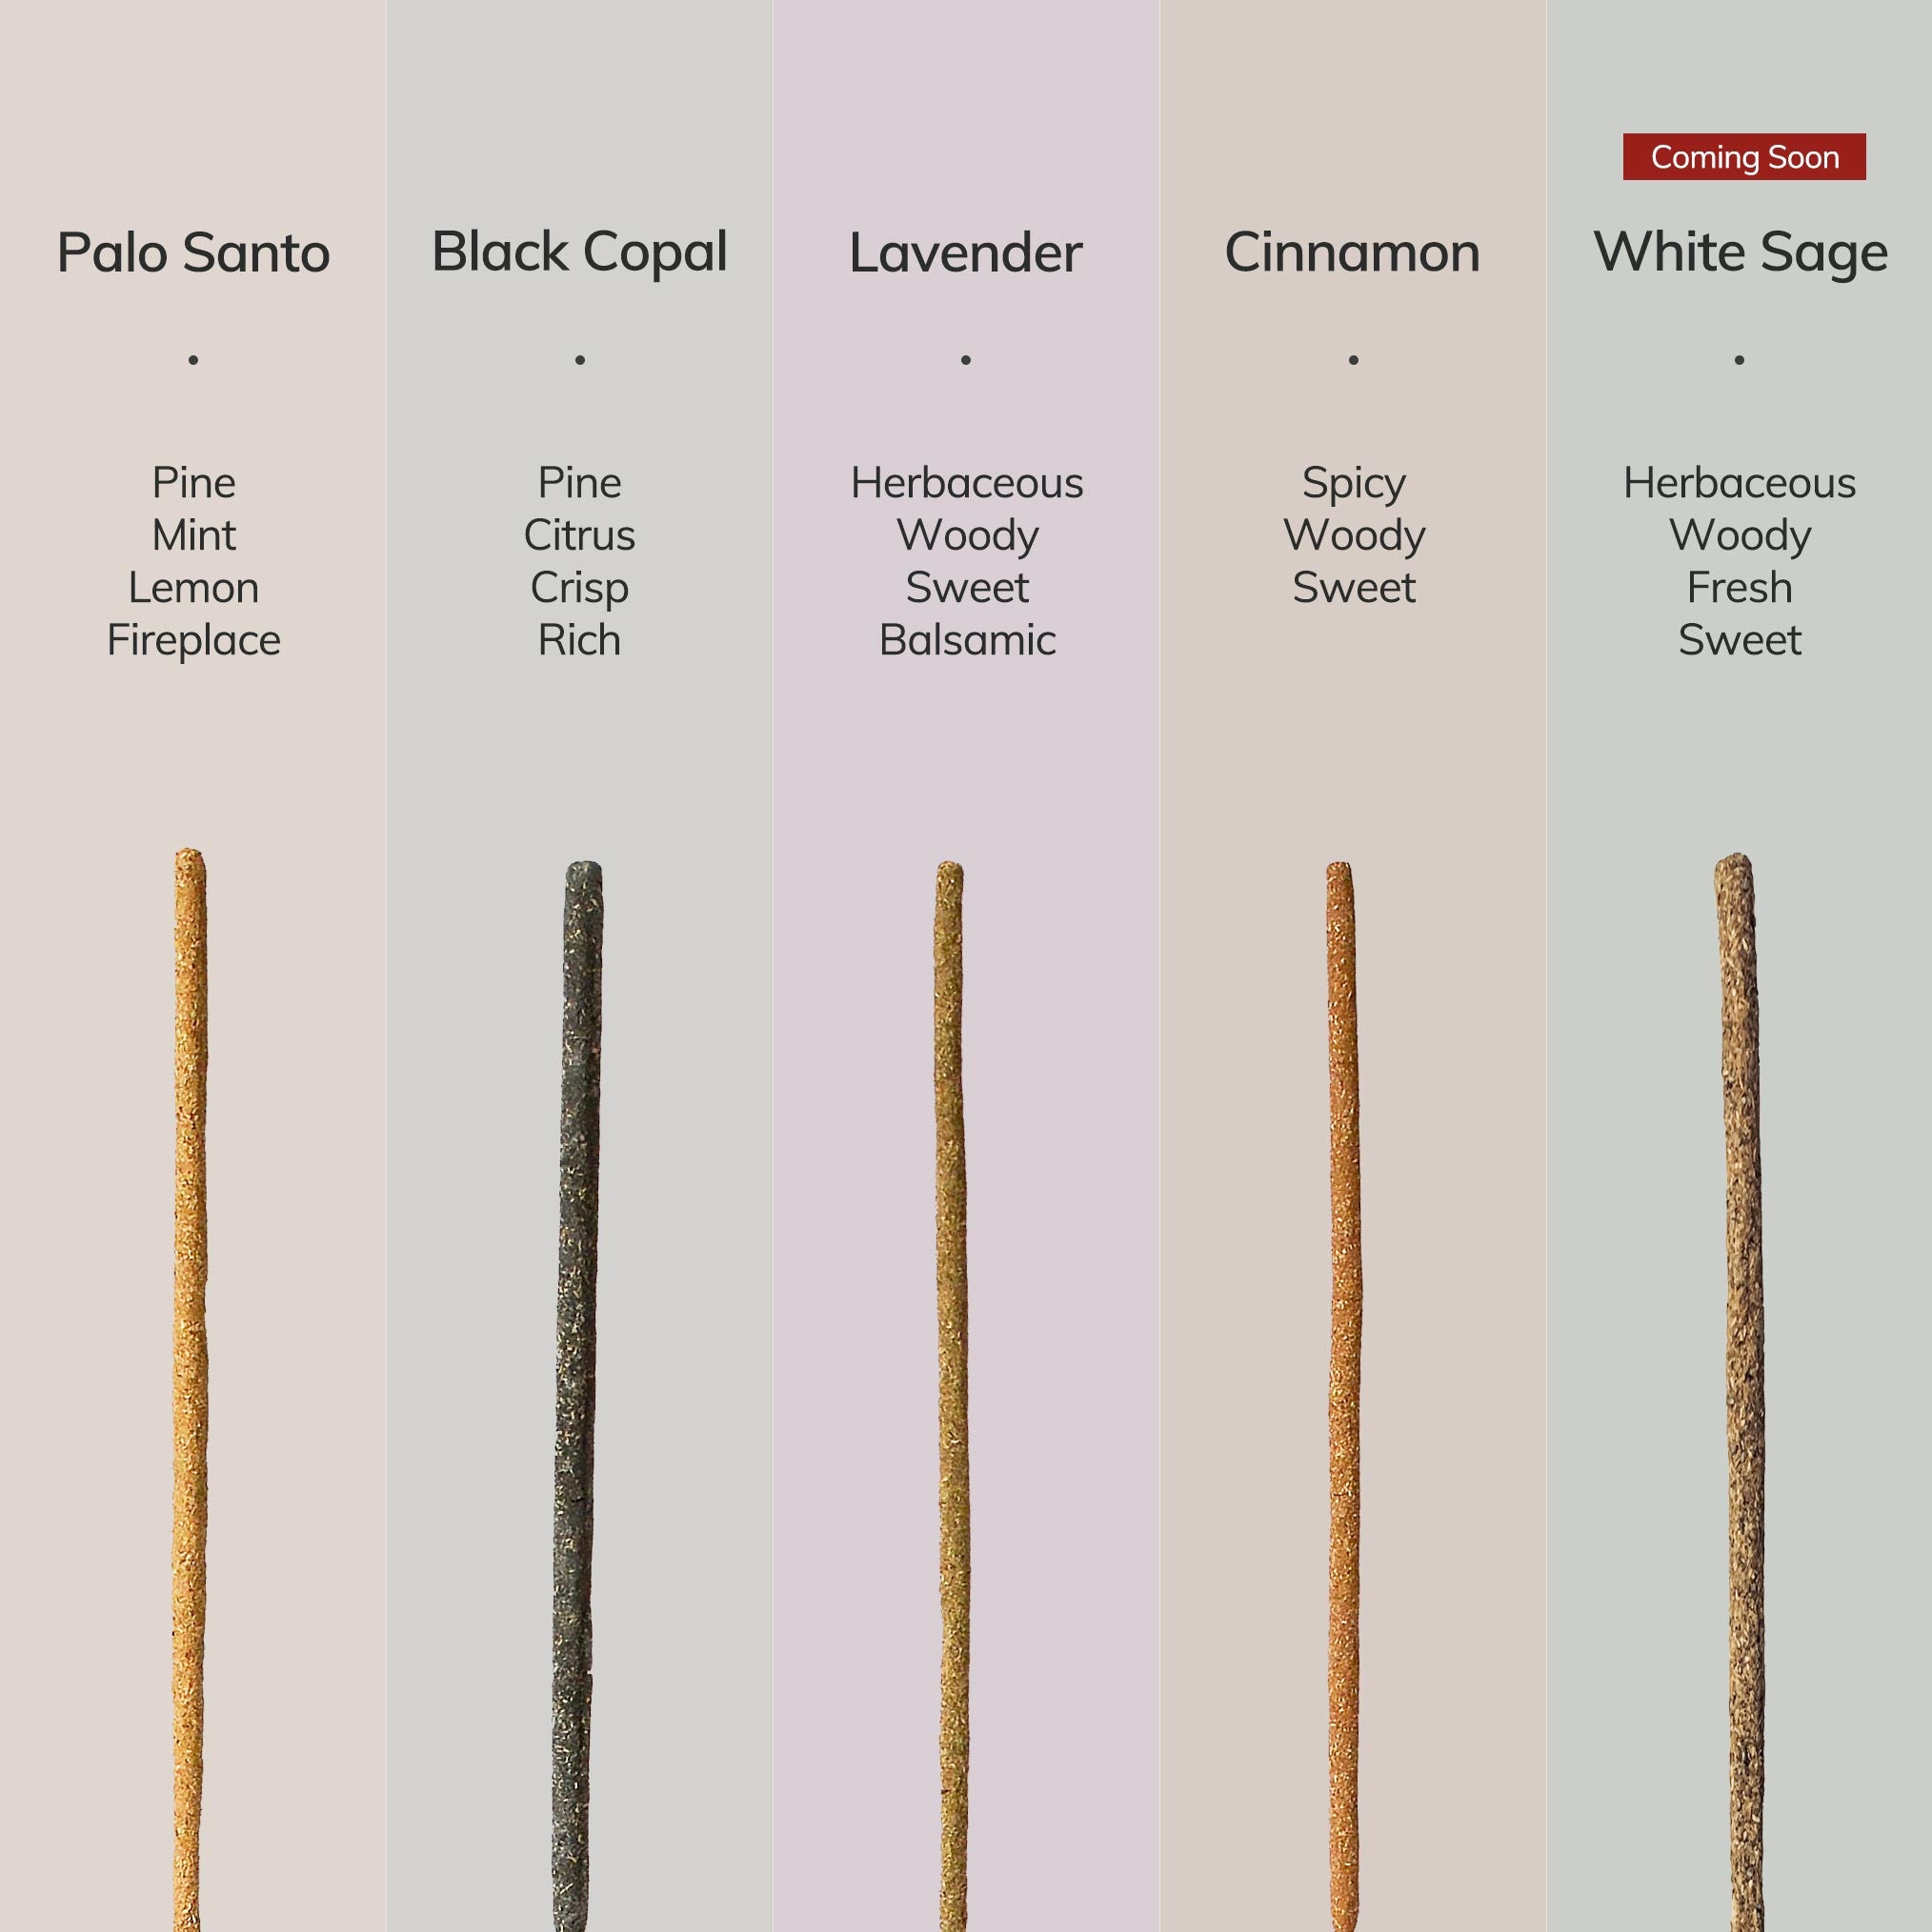 incense made of Palo Santo, Copal, Lavender, Cinnamon, White Sage